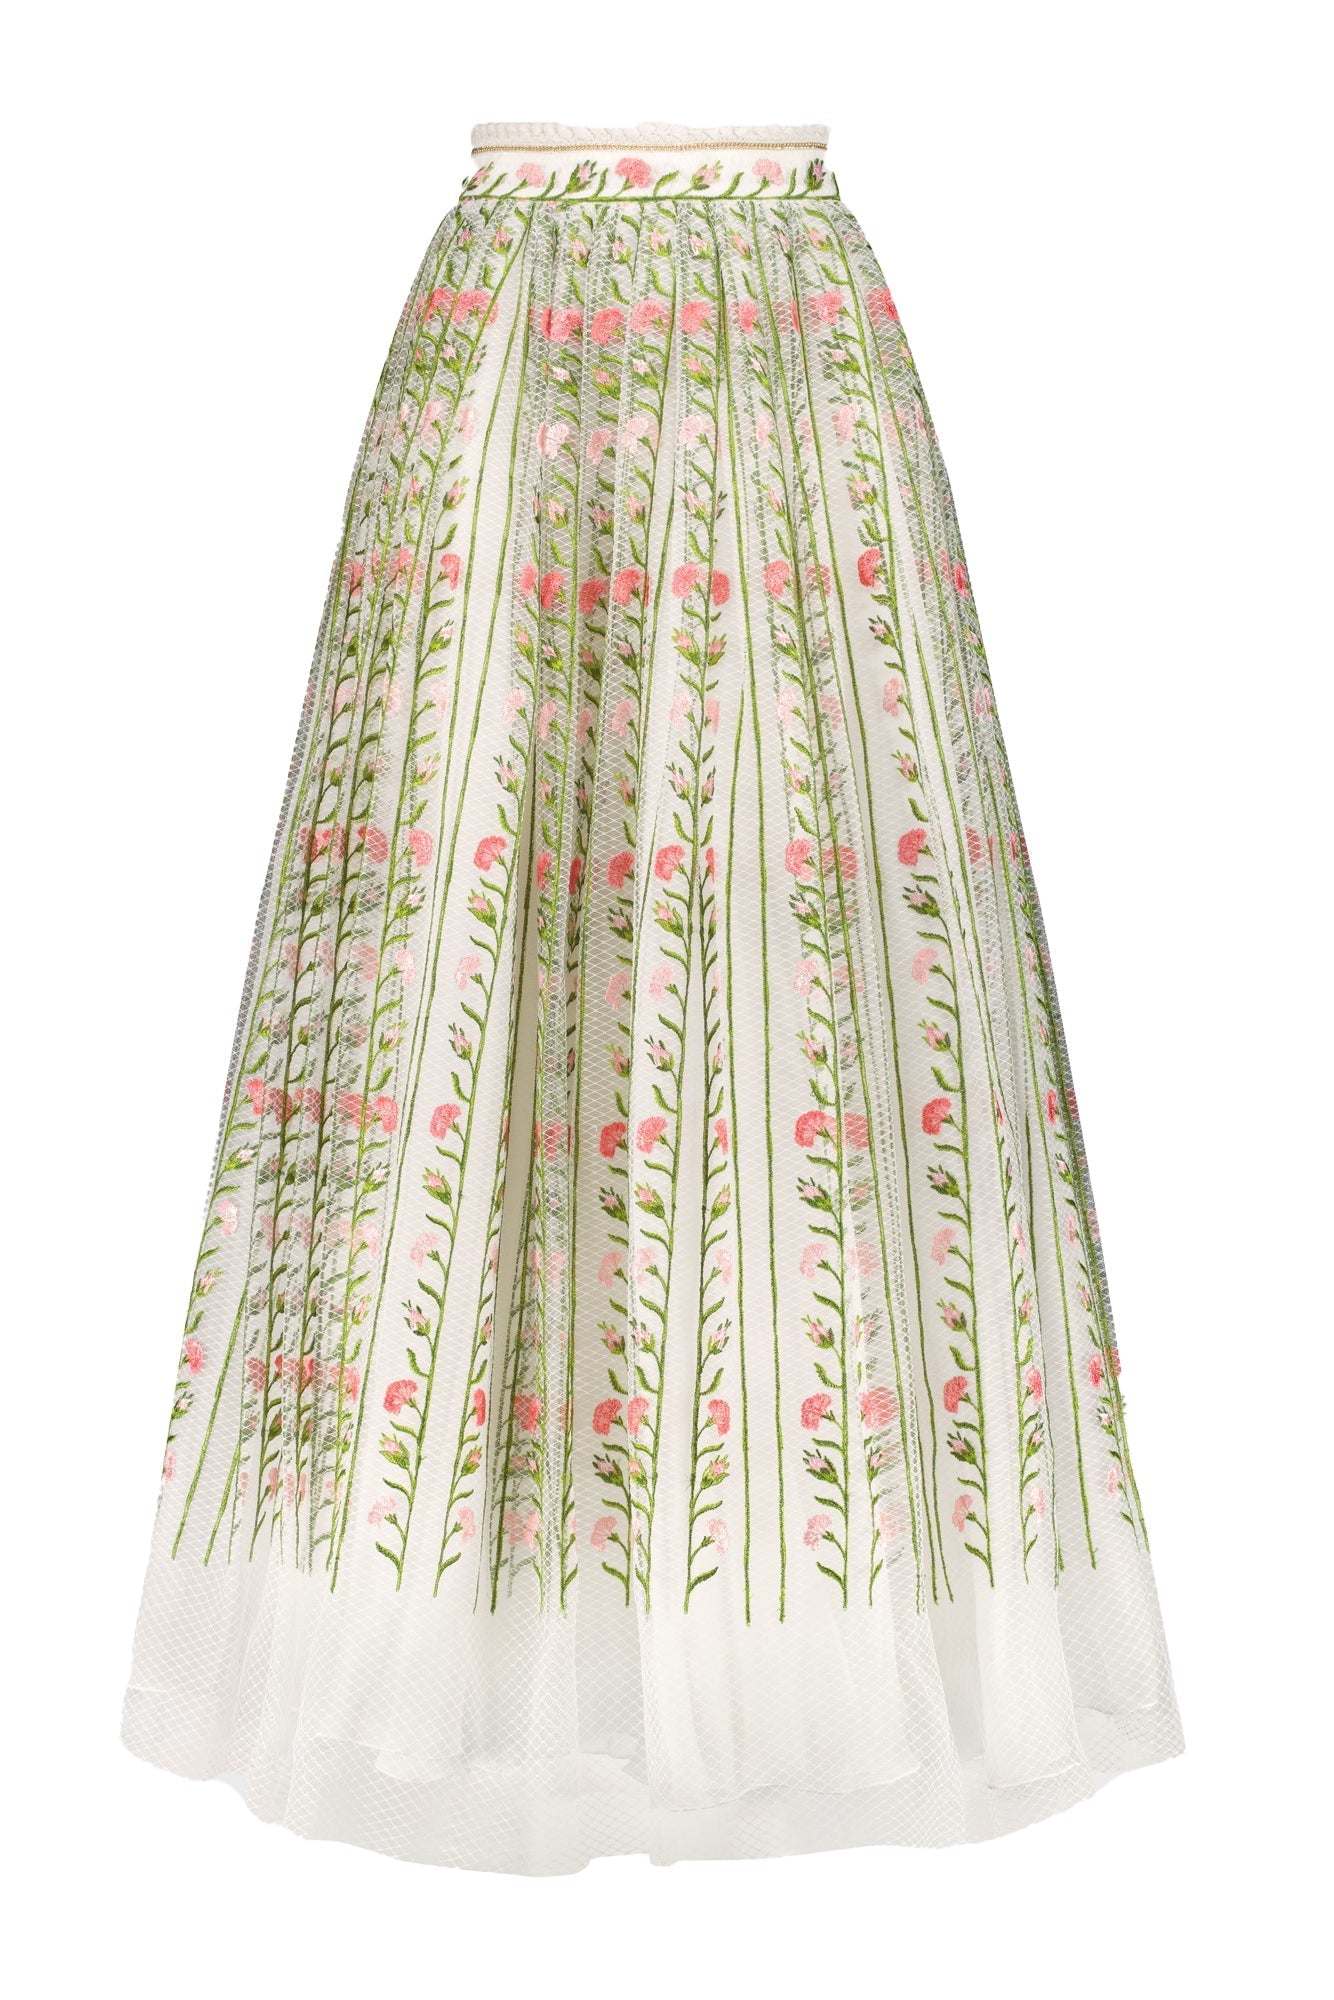 GIAMBATTISTA VALLI-Embroidered Midi Skirt-WHITE/MULTI